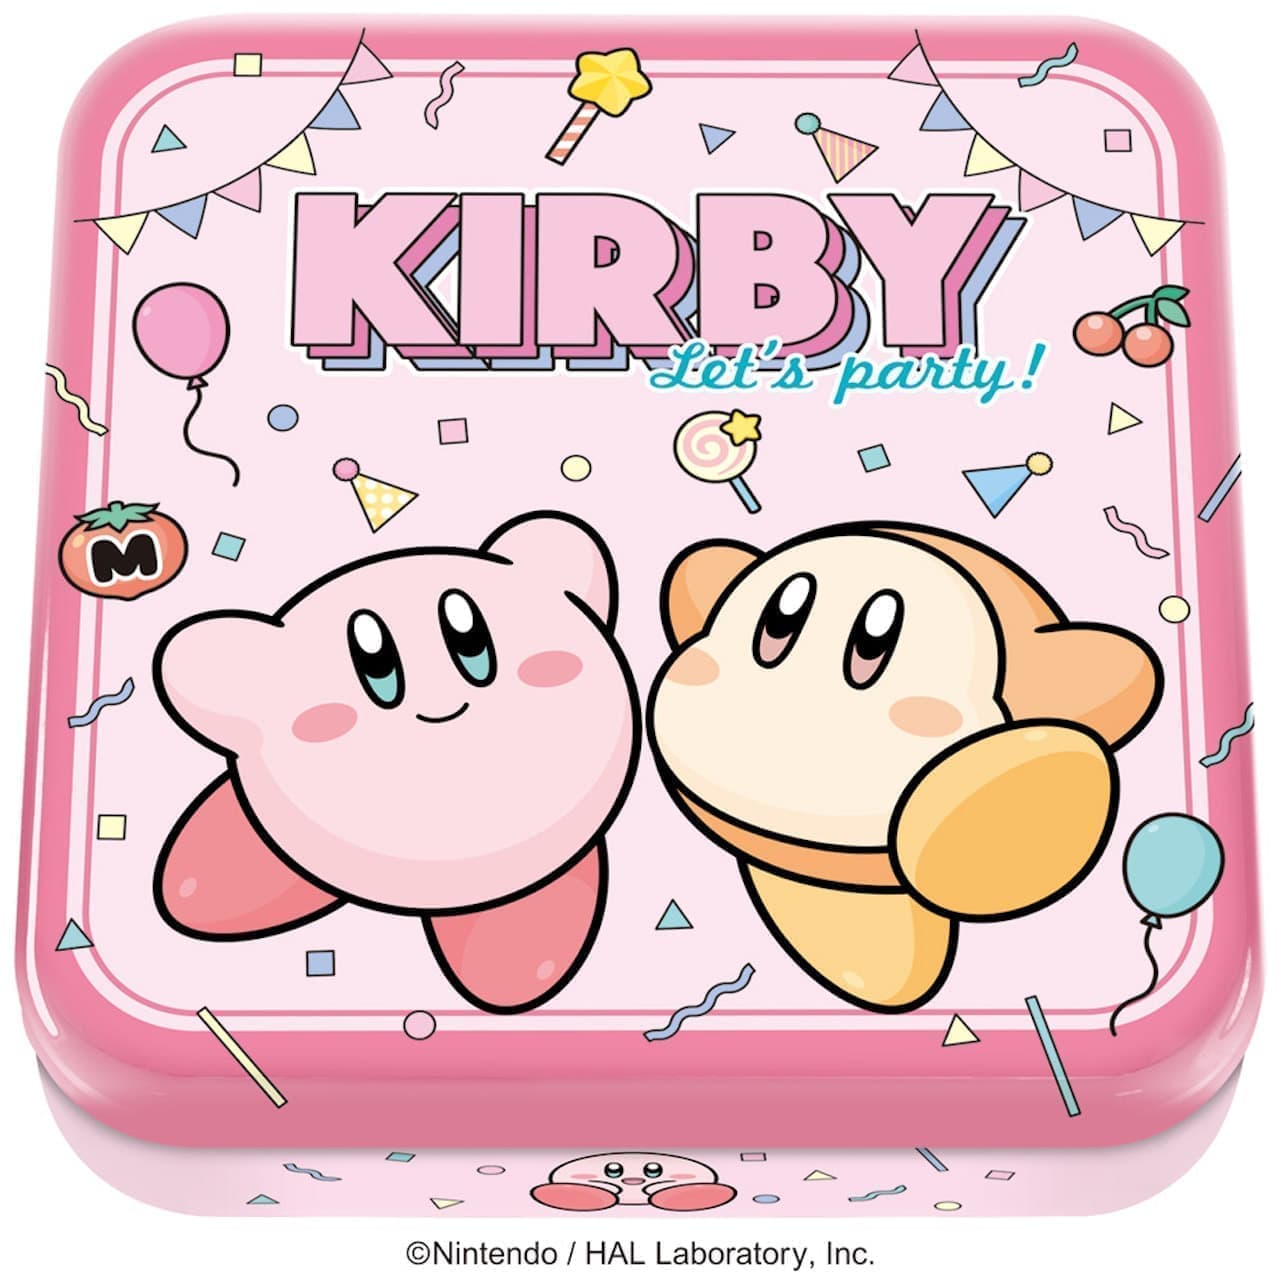 Heart "Kirby's chocolate gift can